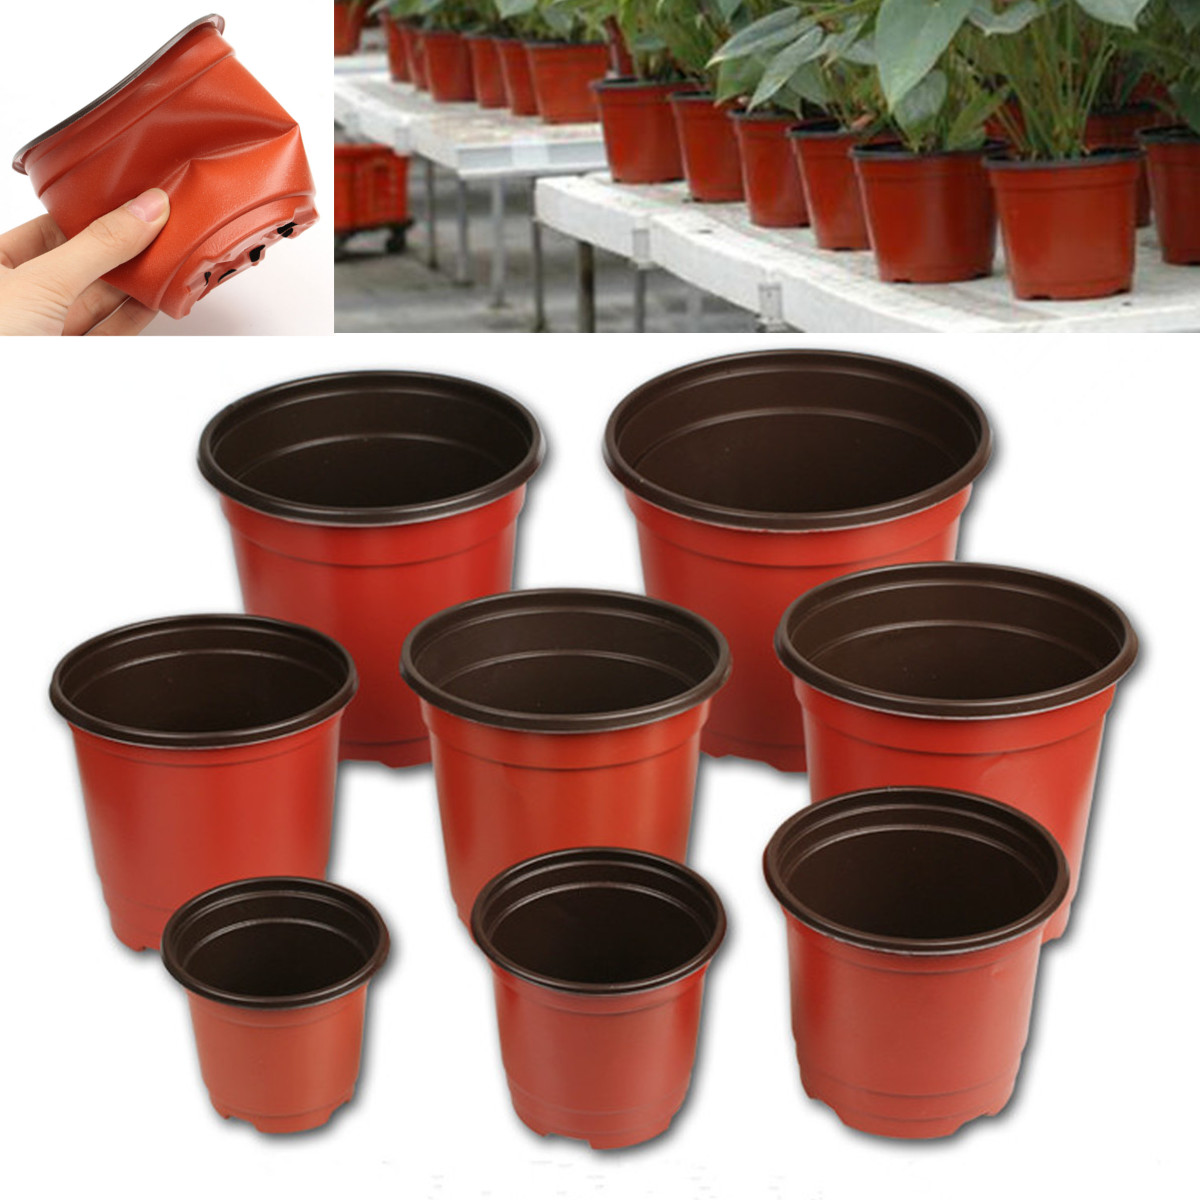 100Pcs Plastic Garden Nursery Pot Flower Terracotta Seedlings Planter Containers Set 35